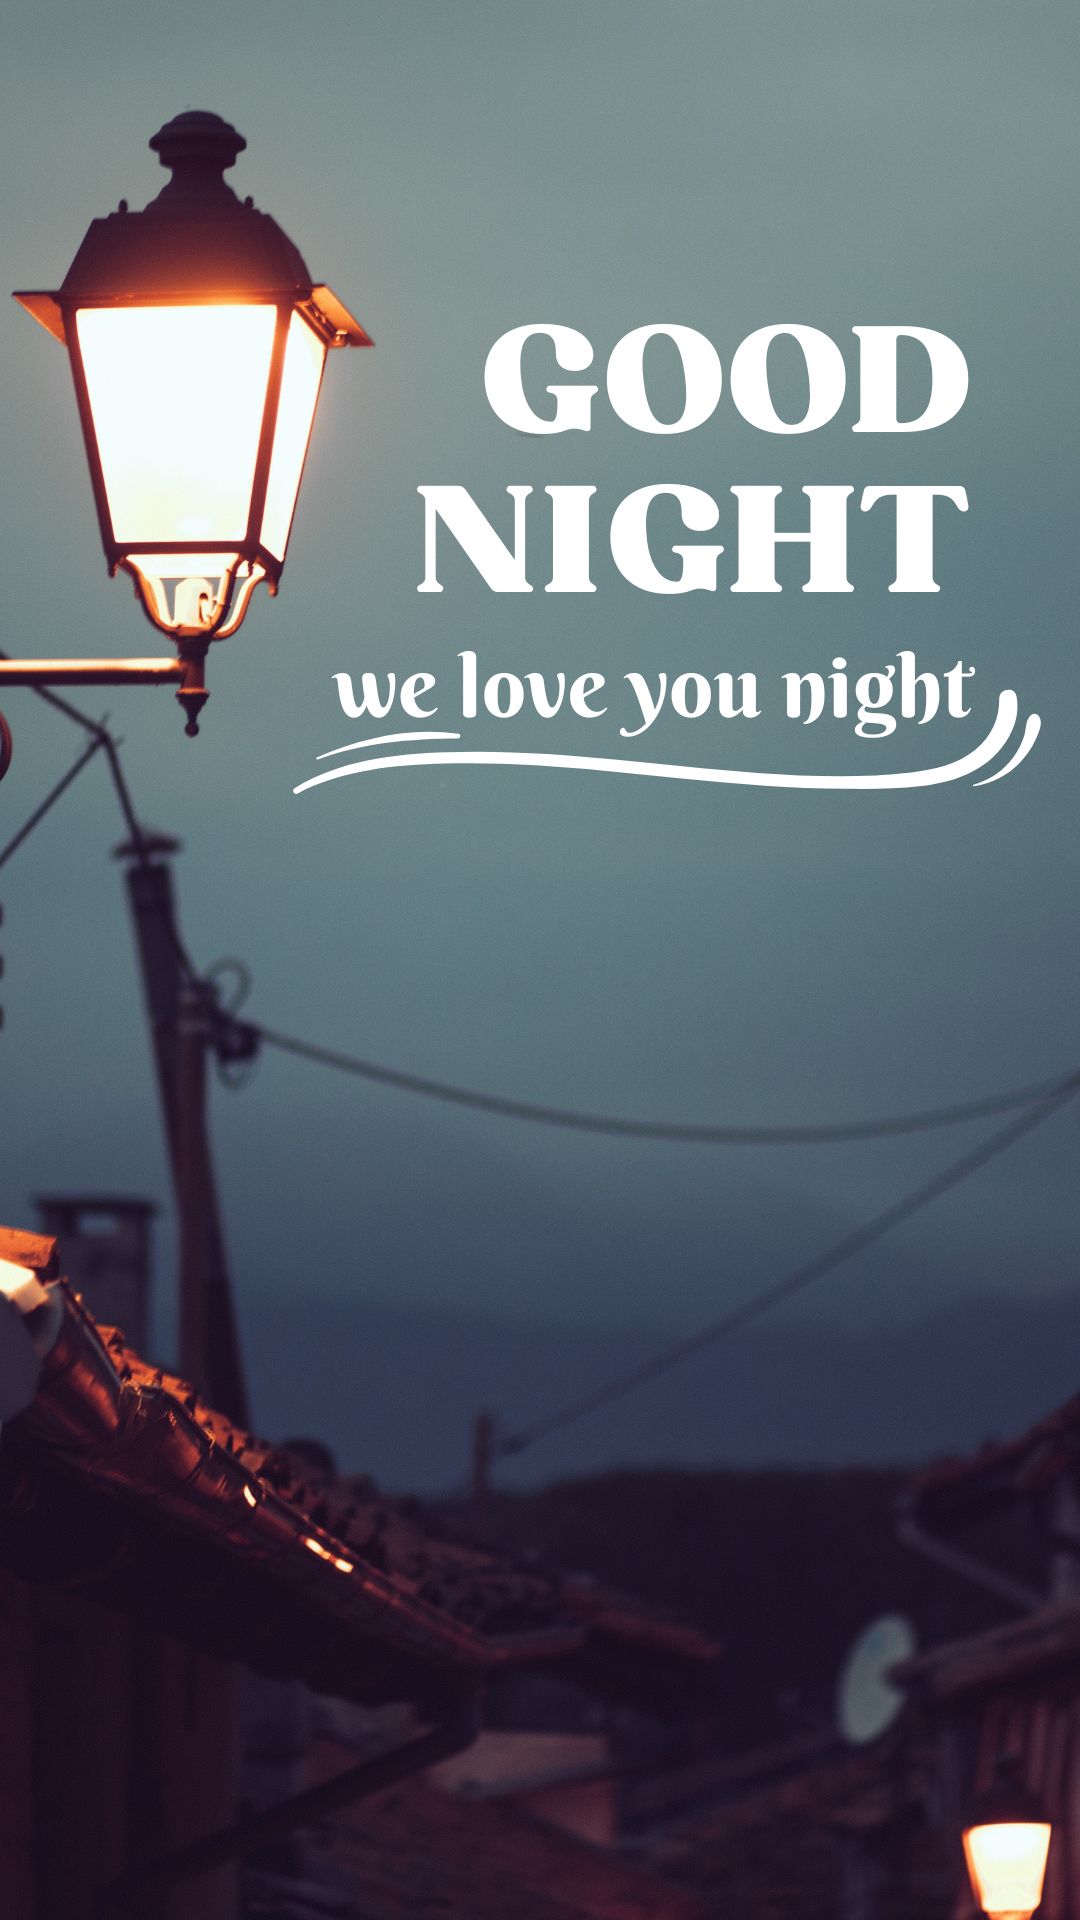 Good night IG Story With Street Light at Night